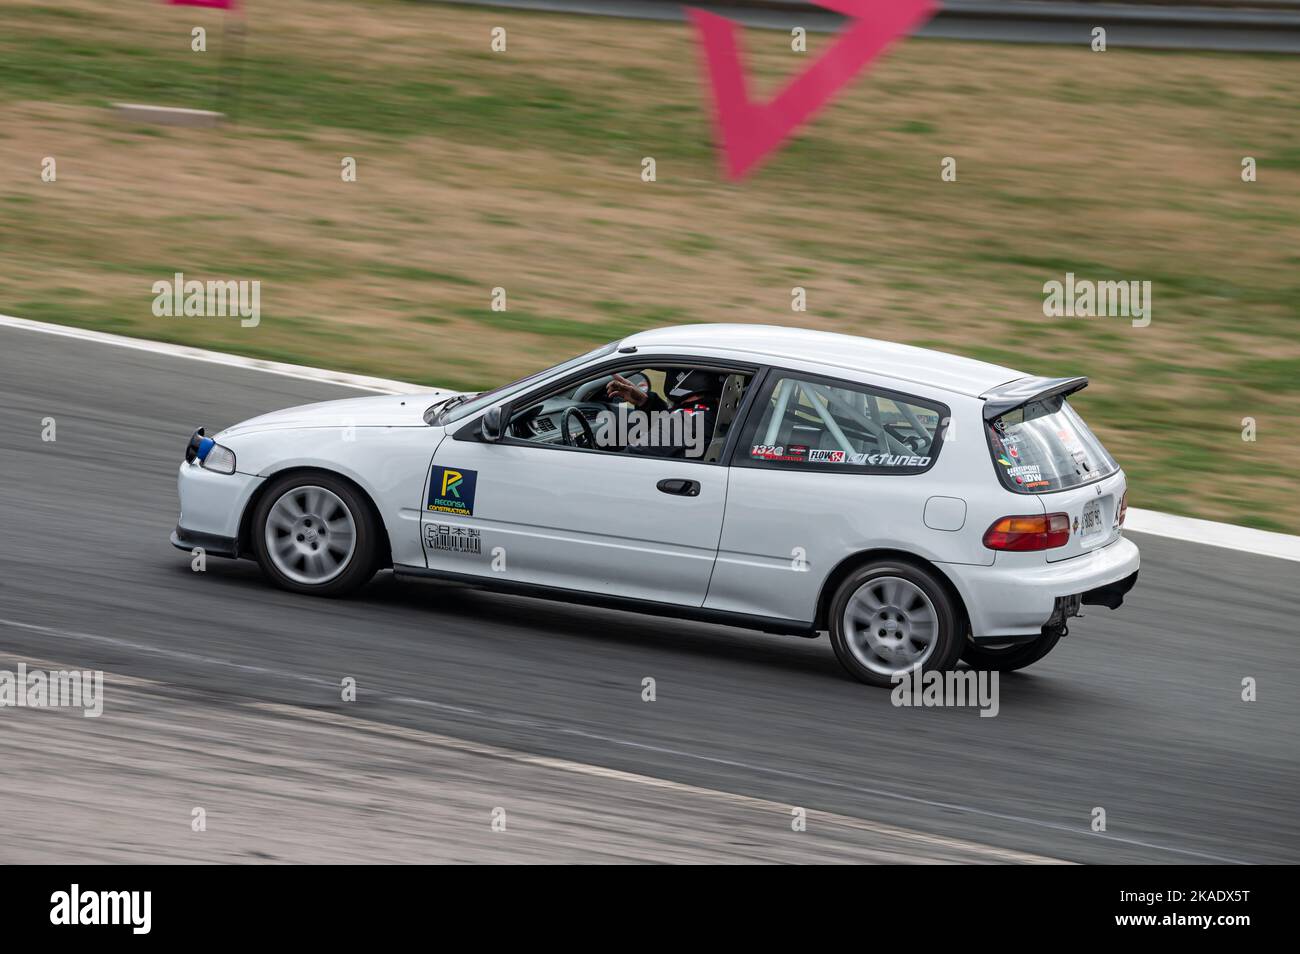 Honda Civic Eg5 on the race track Stock Photo - Alamy